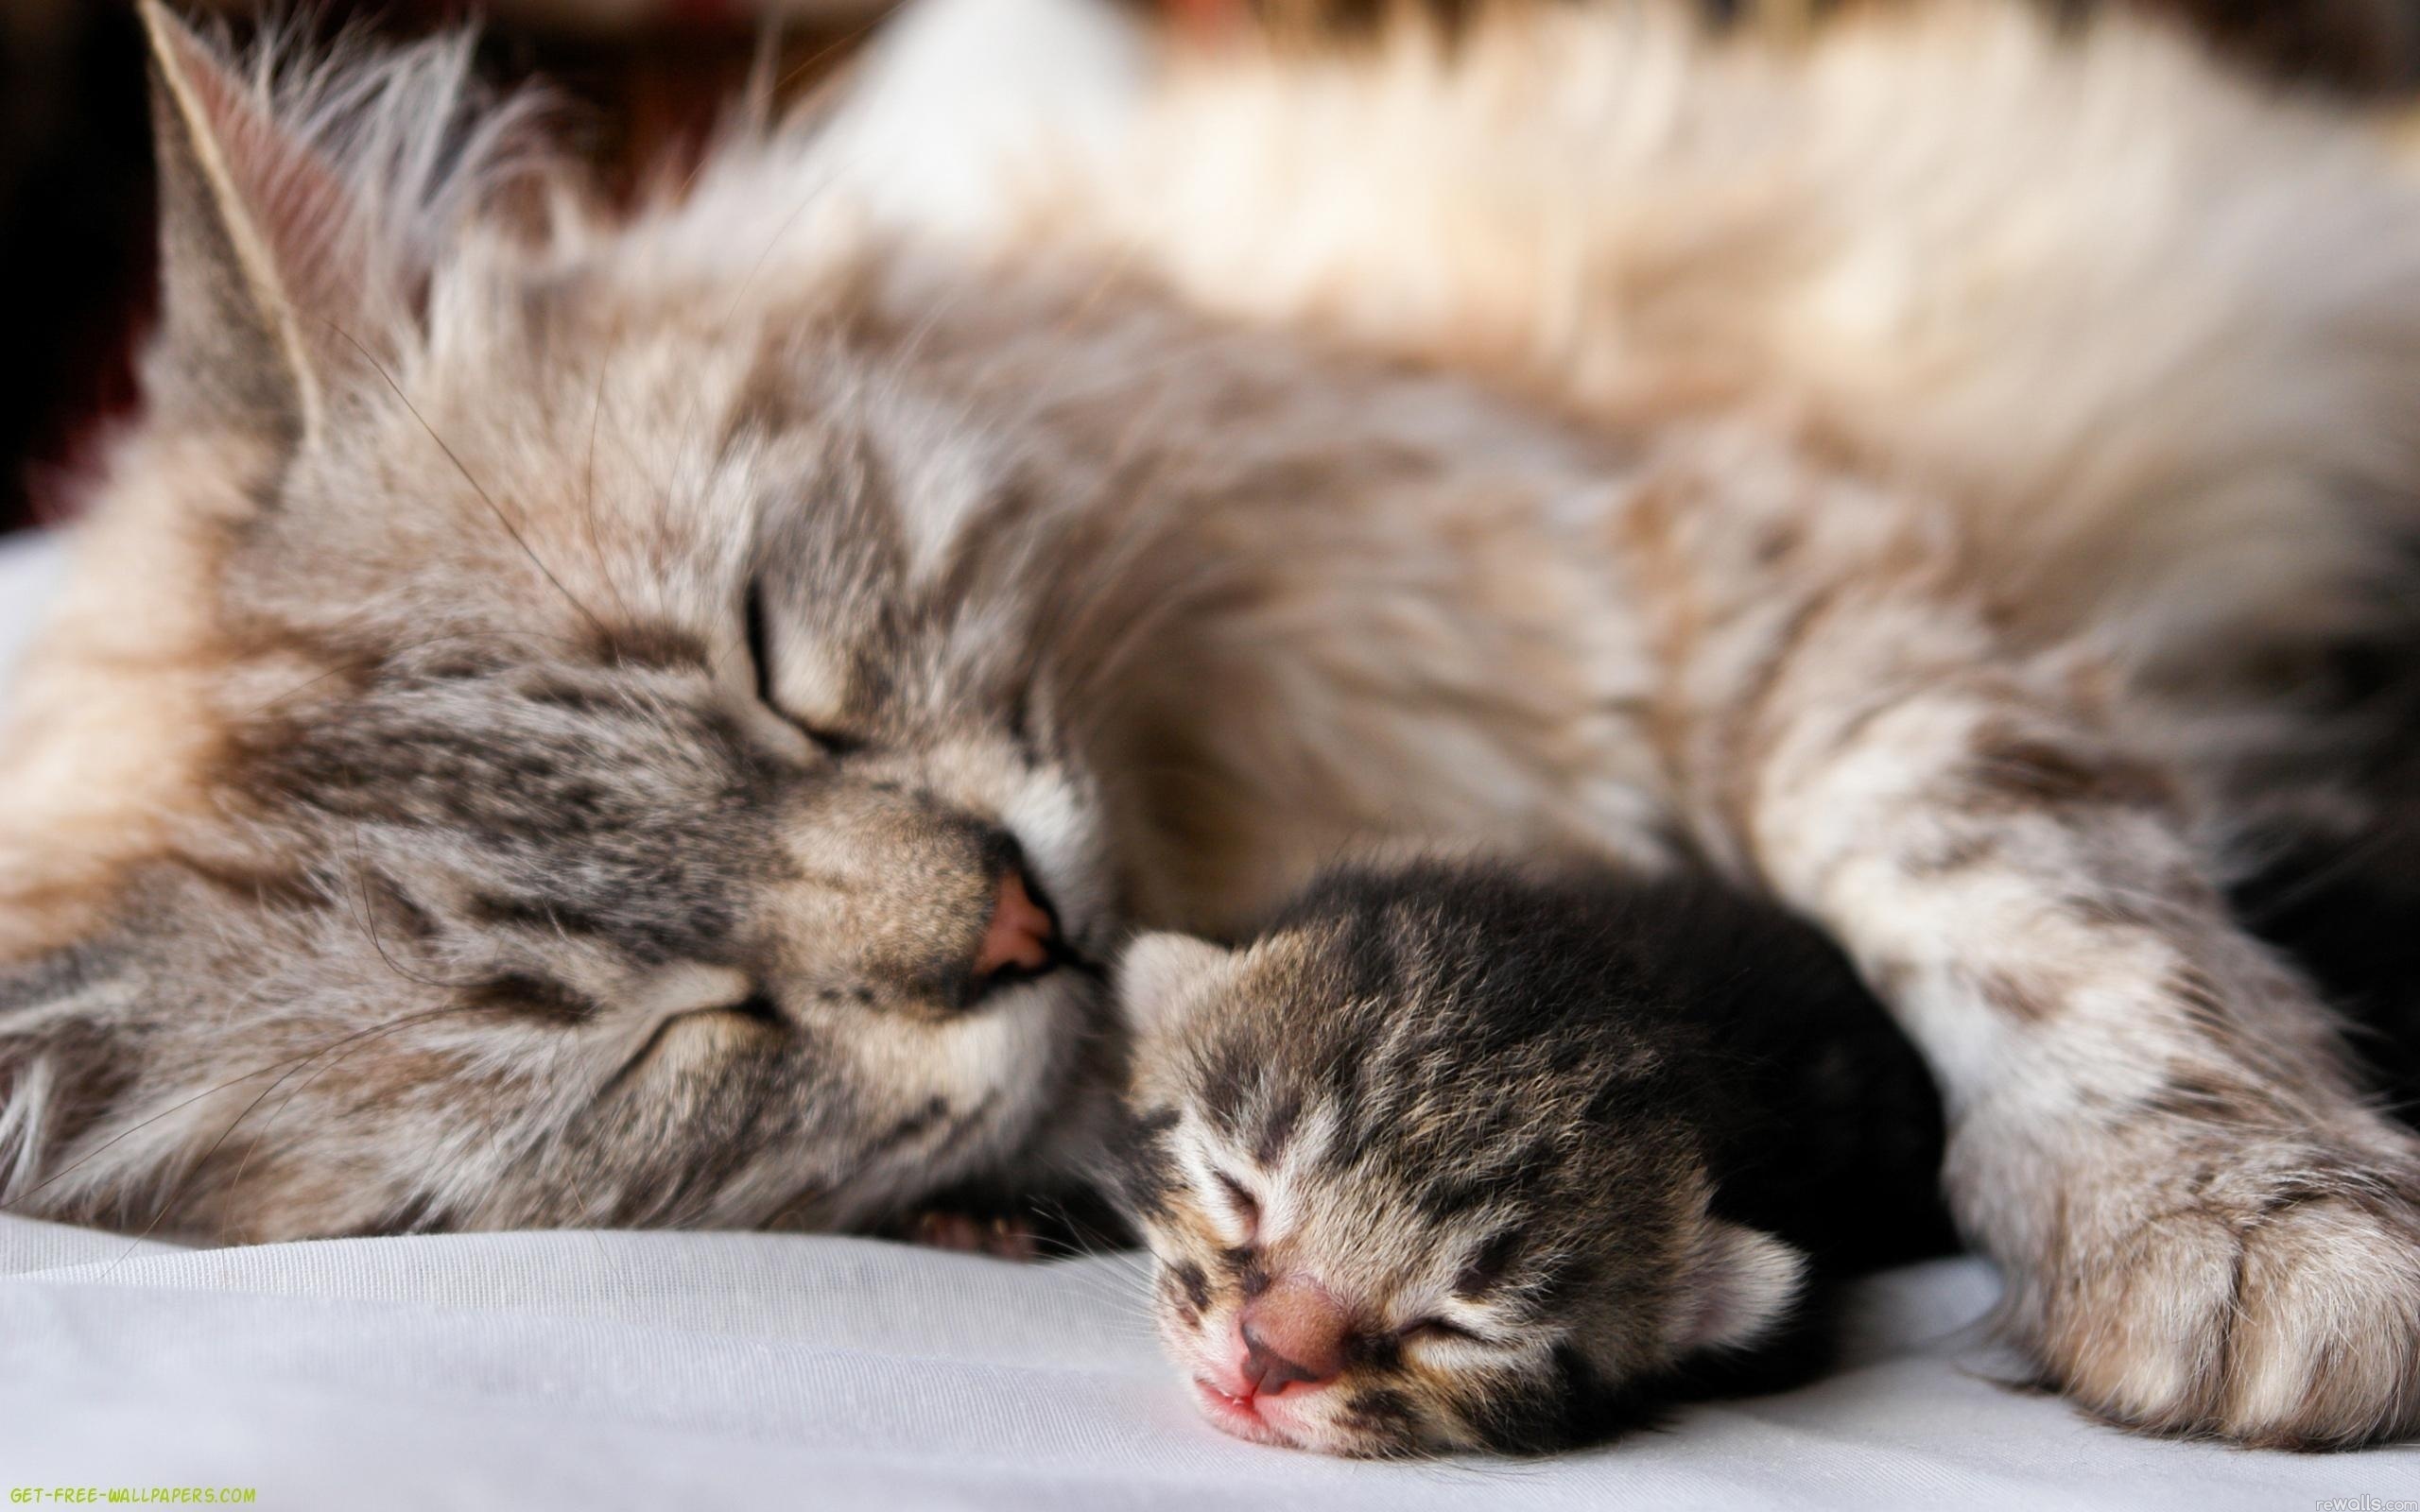 Mother Cat Asleep with Her Baby Kitten